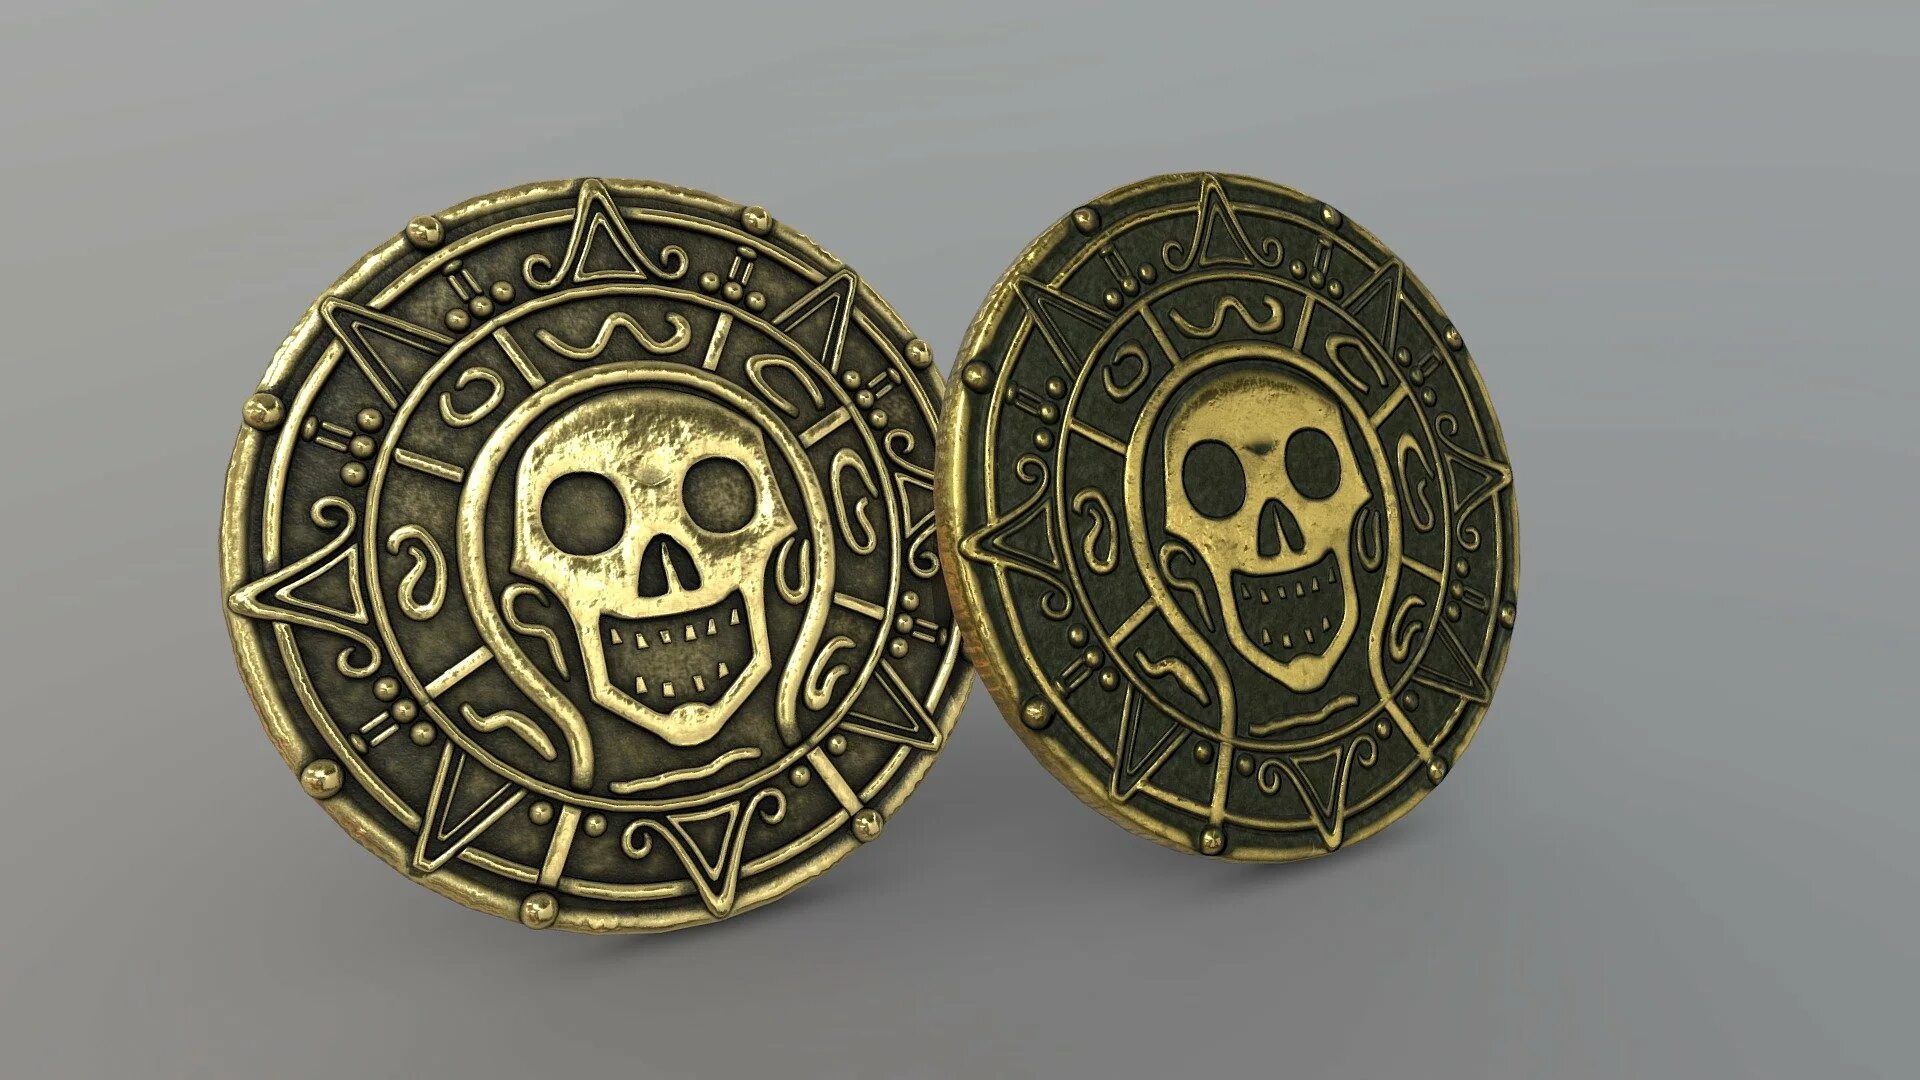 Aztec gold. Пираты Карибского моря монета ацтеков. Пираты Карибского моря золото ацтеков. Монета ацтеков из пиратов Карибского моря. Золото ацтеков монета пираты Карибского моря.